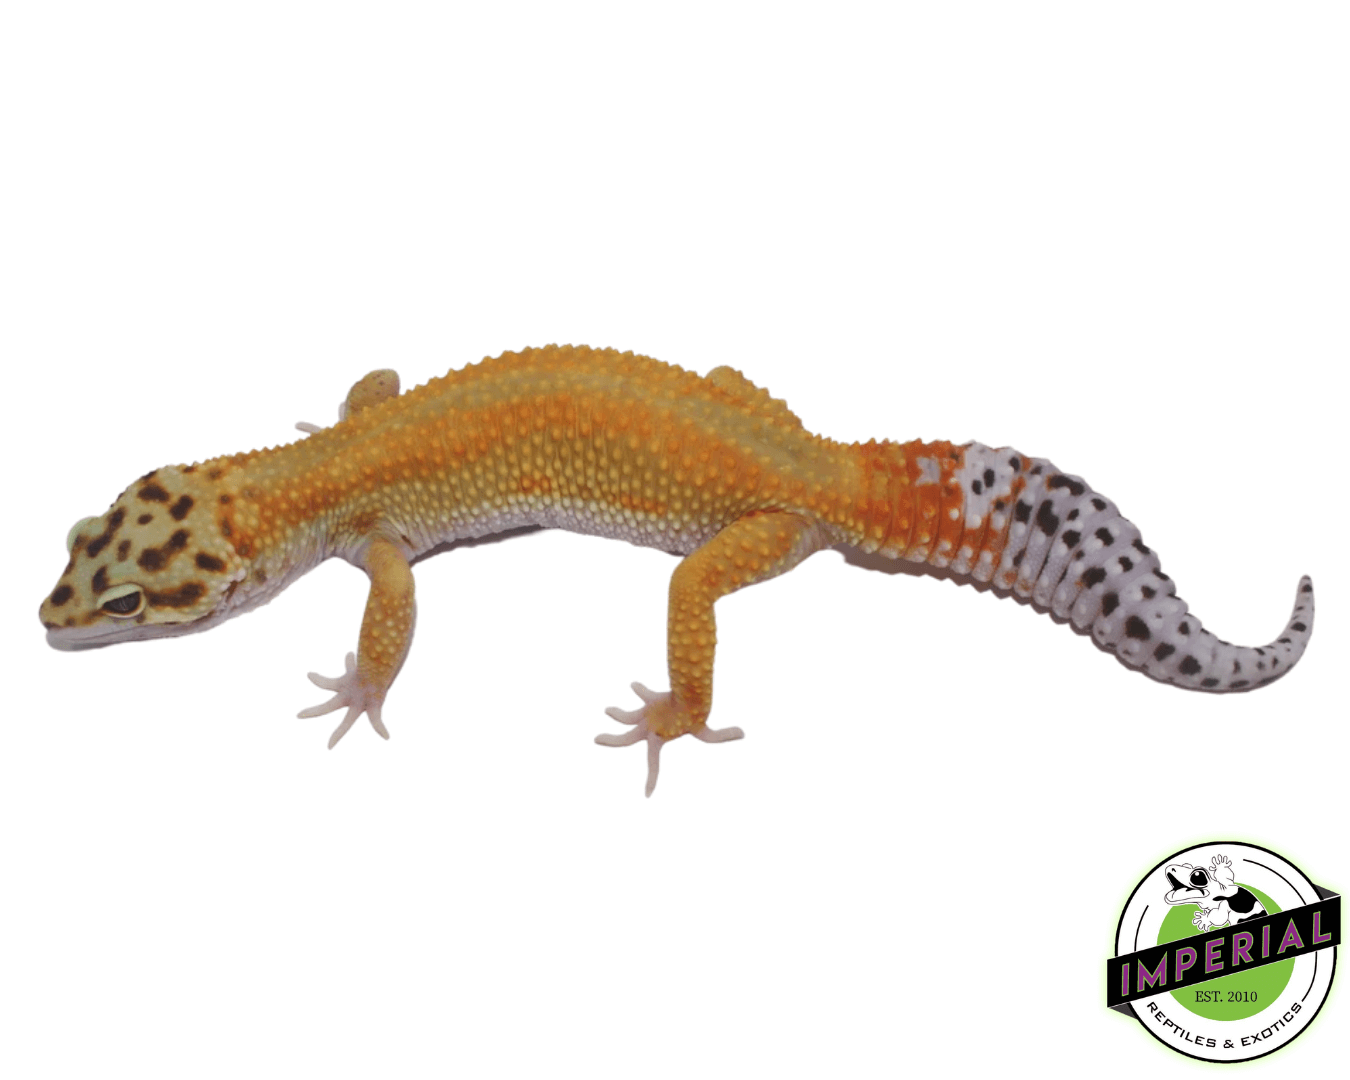 Reverse Stripe Leopard Gecko by Imperial Reptiles & Exotics, LLC